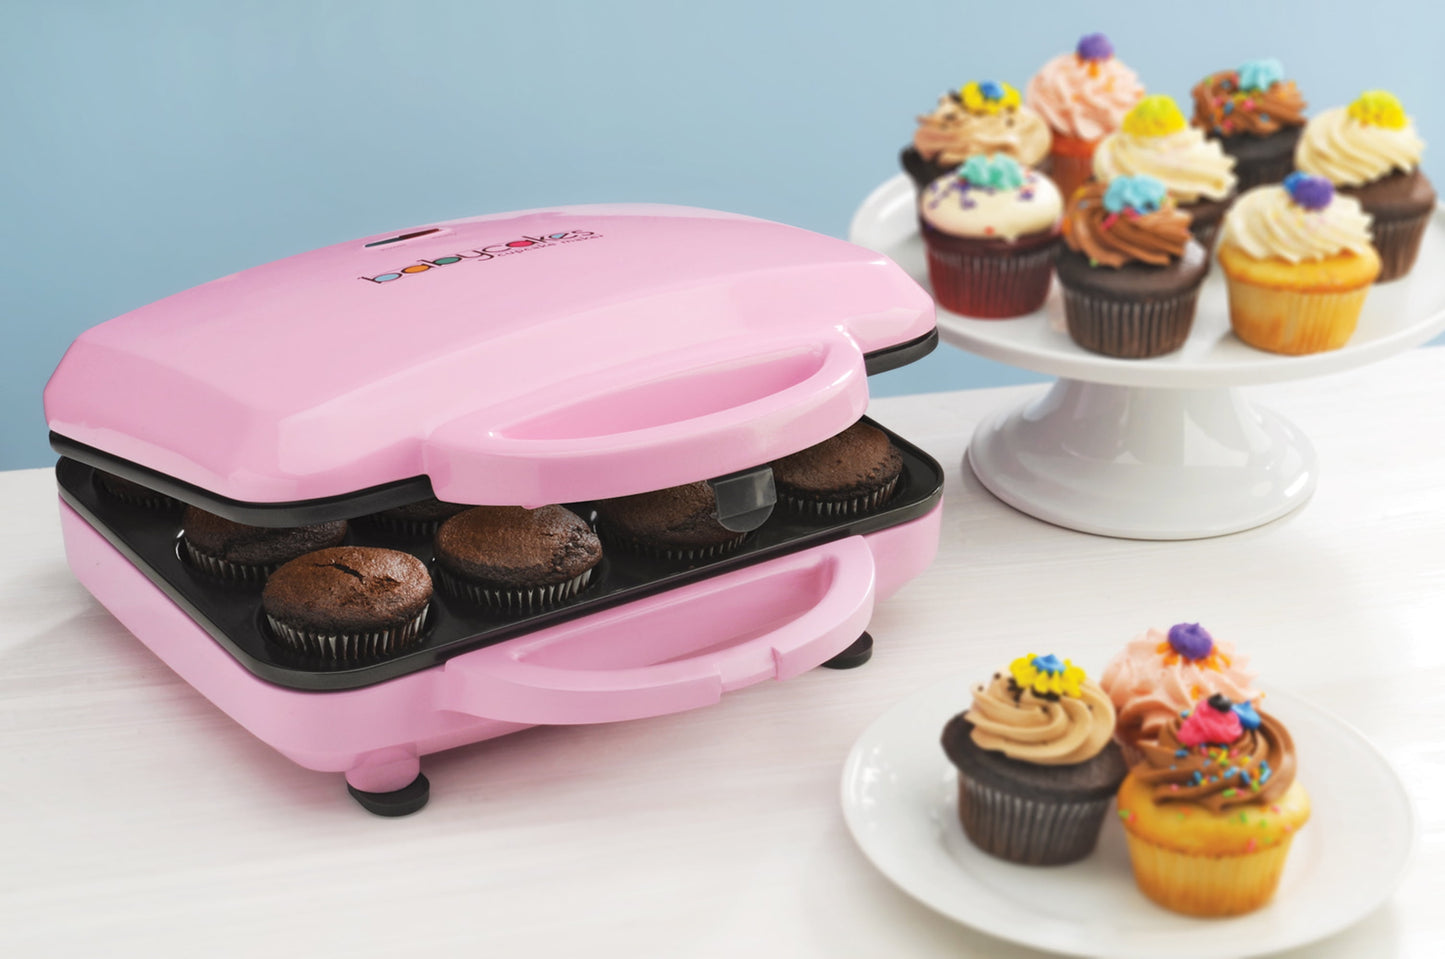 Babycakes Full Size Cupcake Maker, Pink, 12-Cupcakes, Model: CC-12